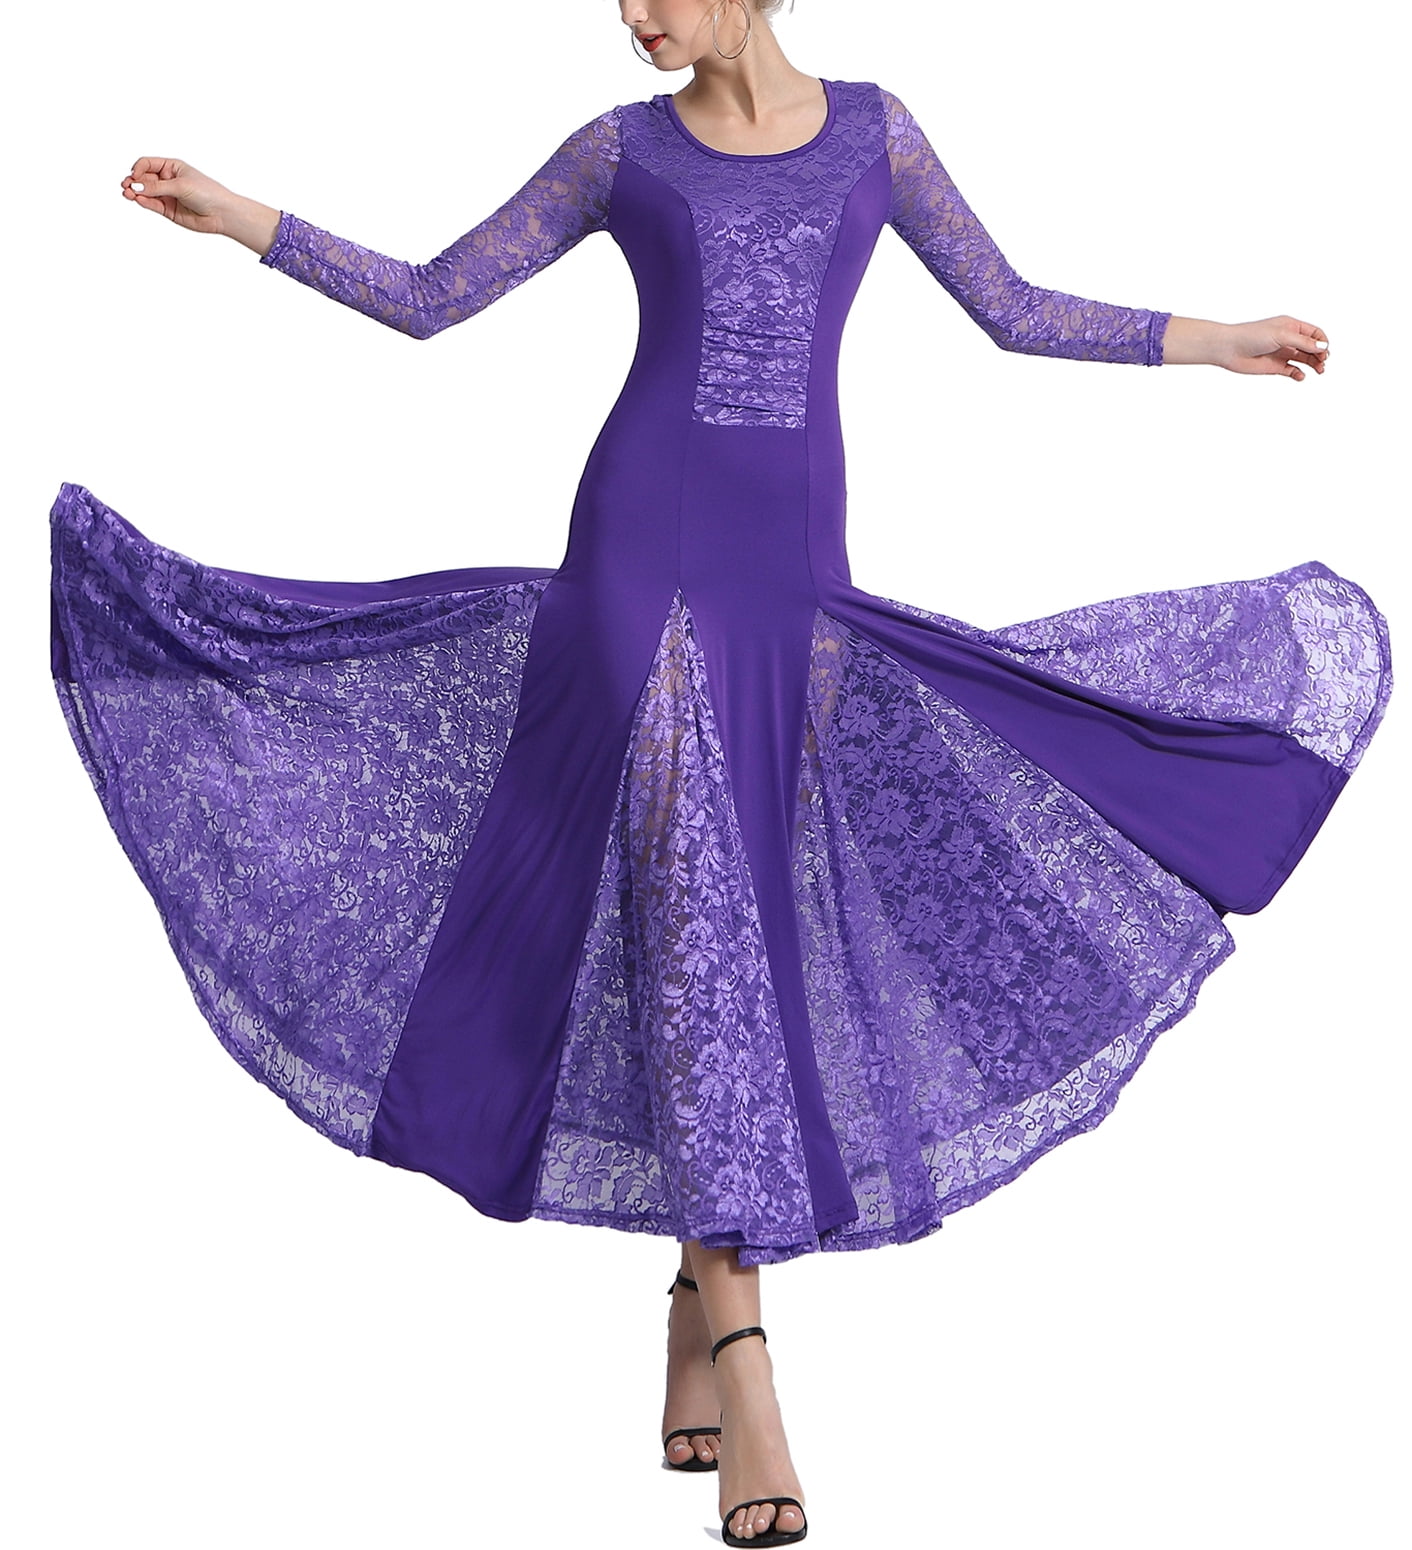 Red Standard Ballroom Dress with Crinoline | DanceDressing – Dance Dressing